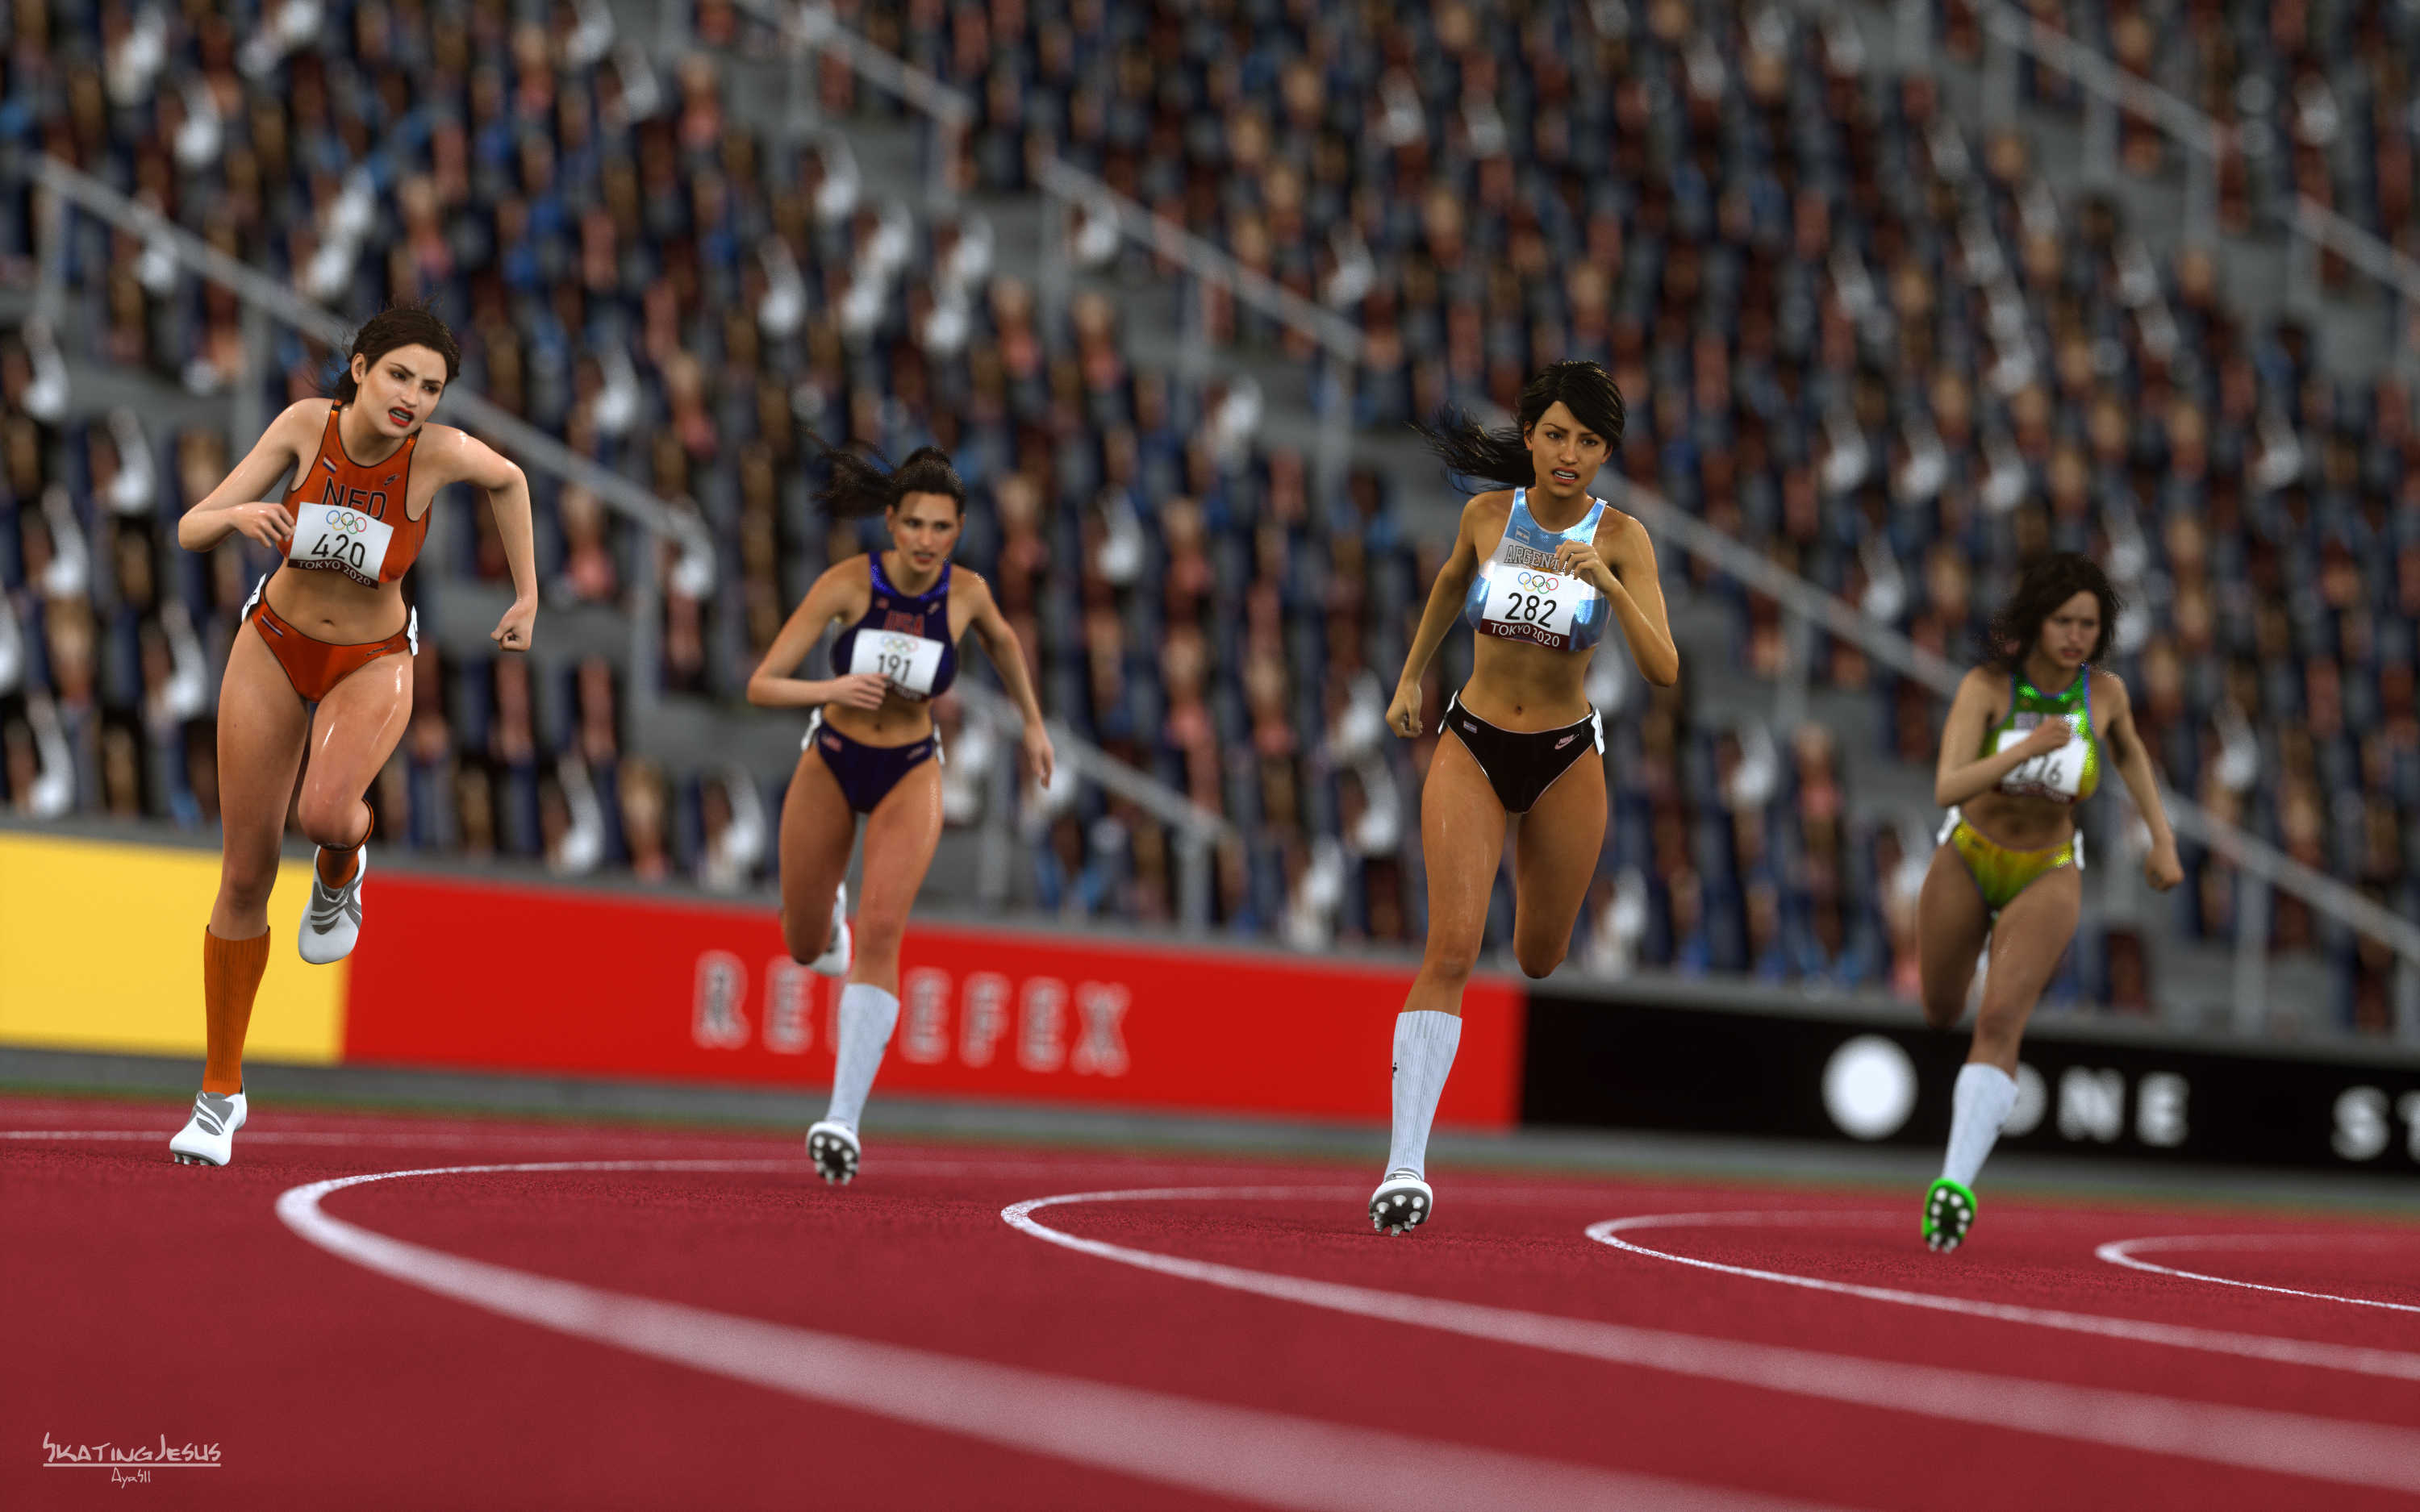 Olympics - Tokyo 2020 - The 400m Finals 002.jpg